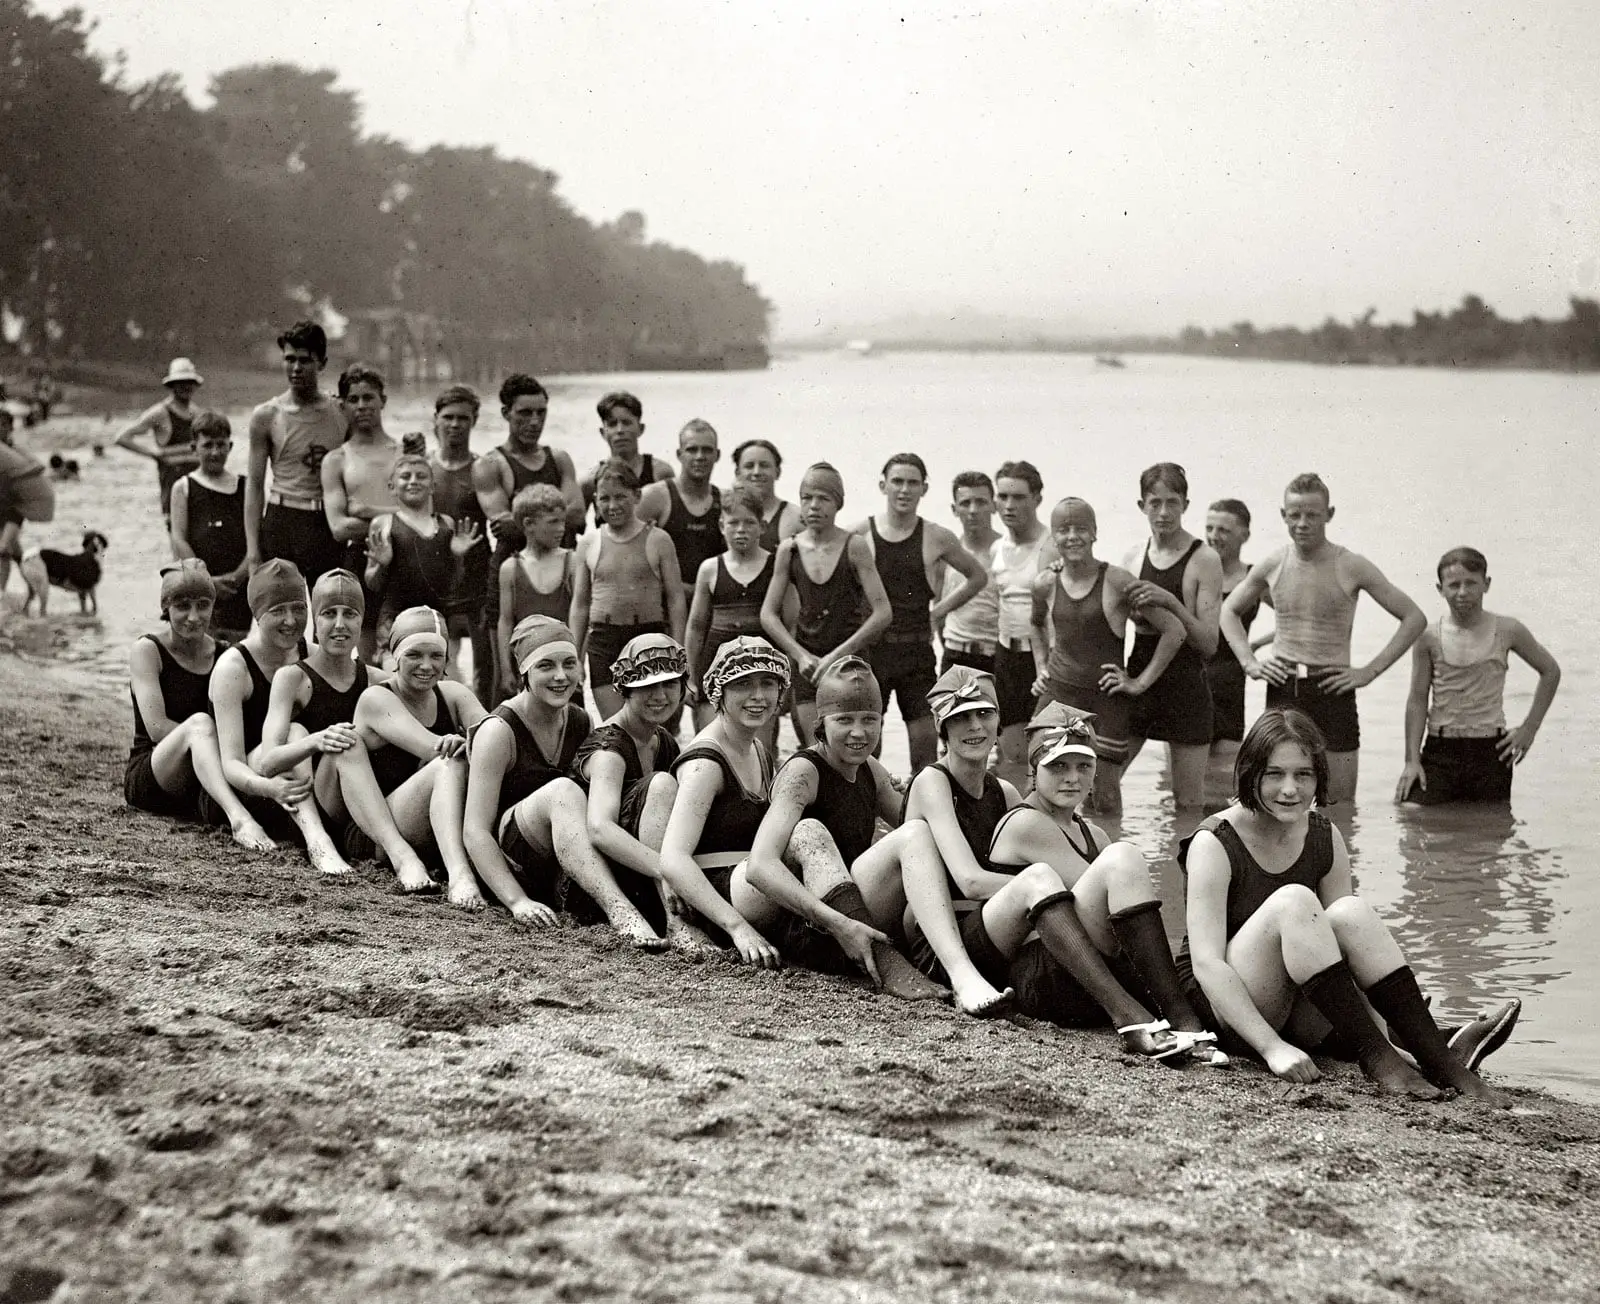 Arlington Bathing Beach in 1923